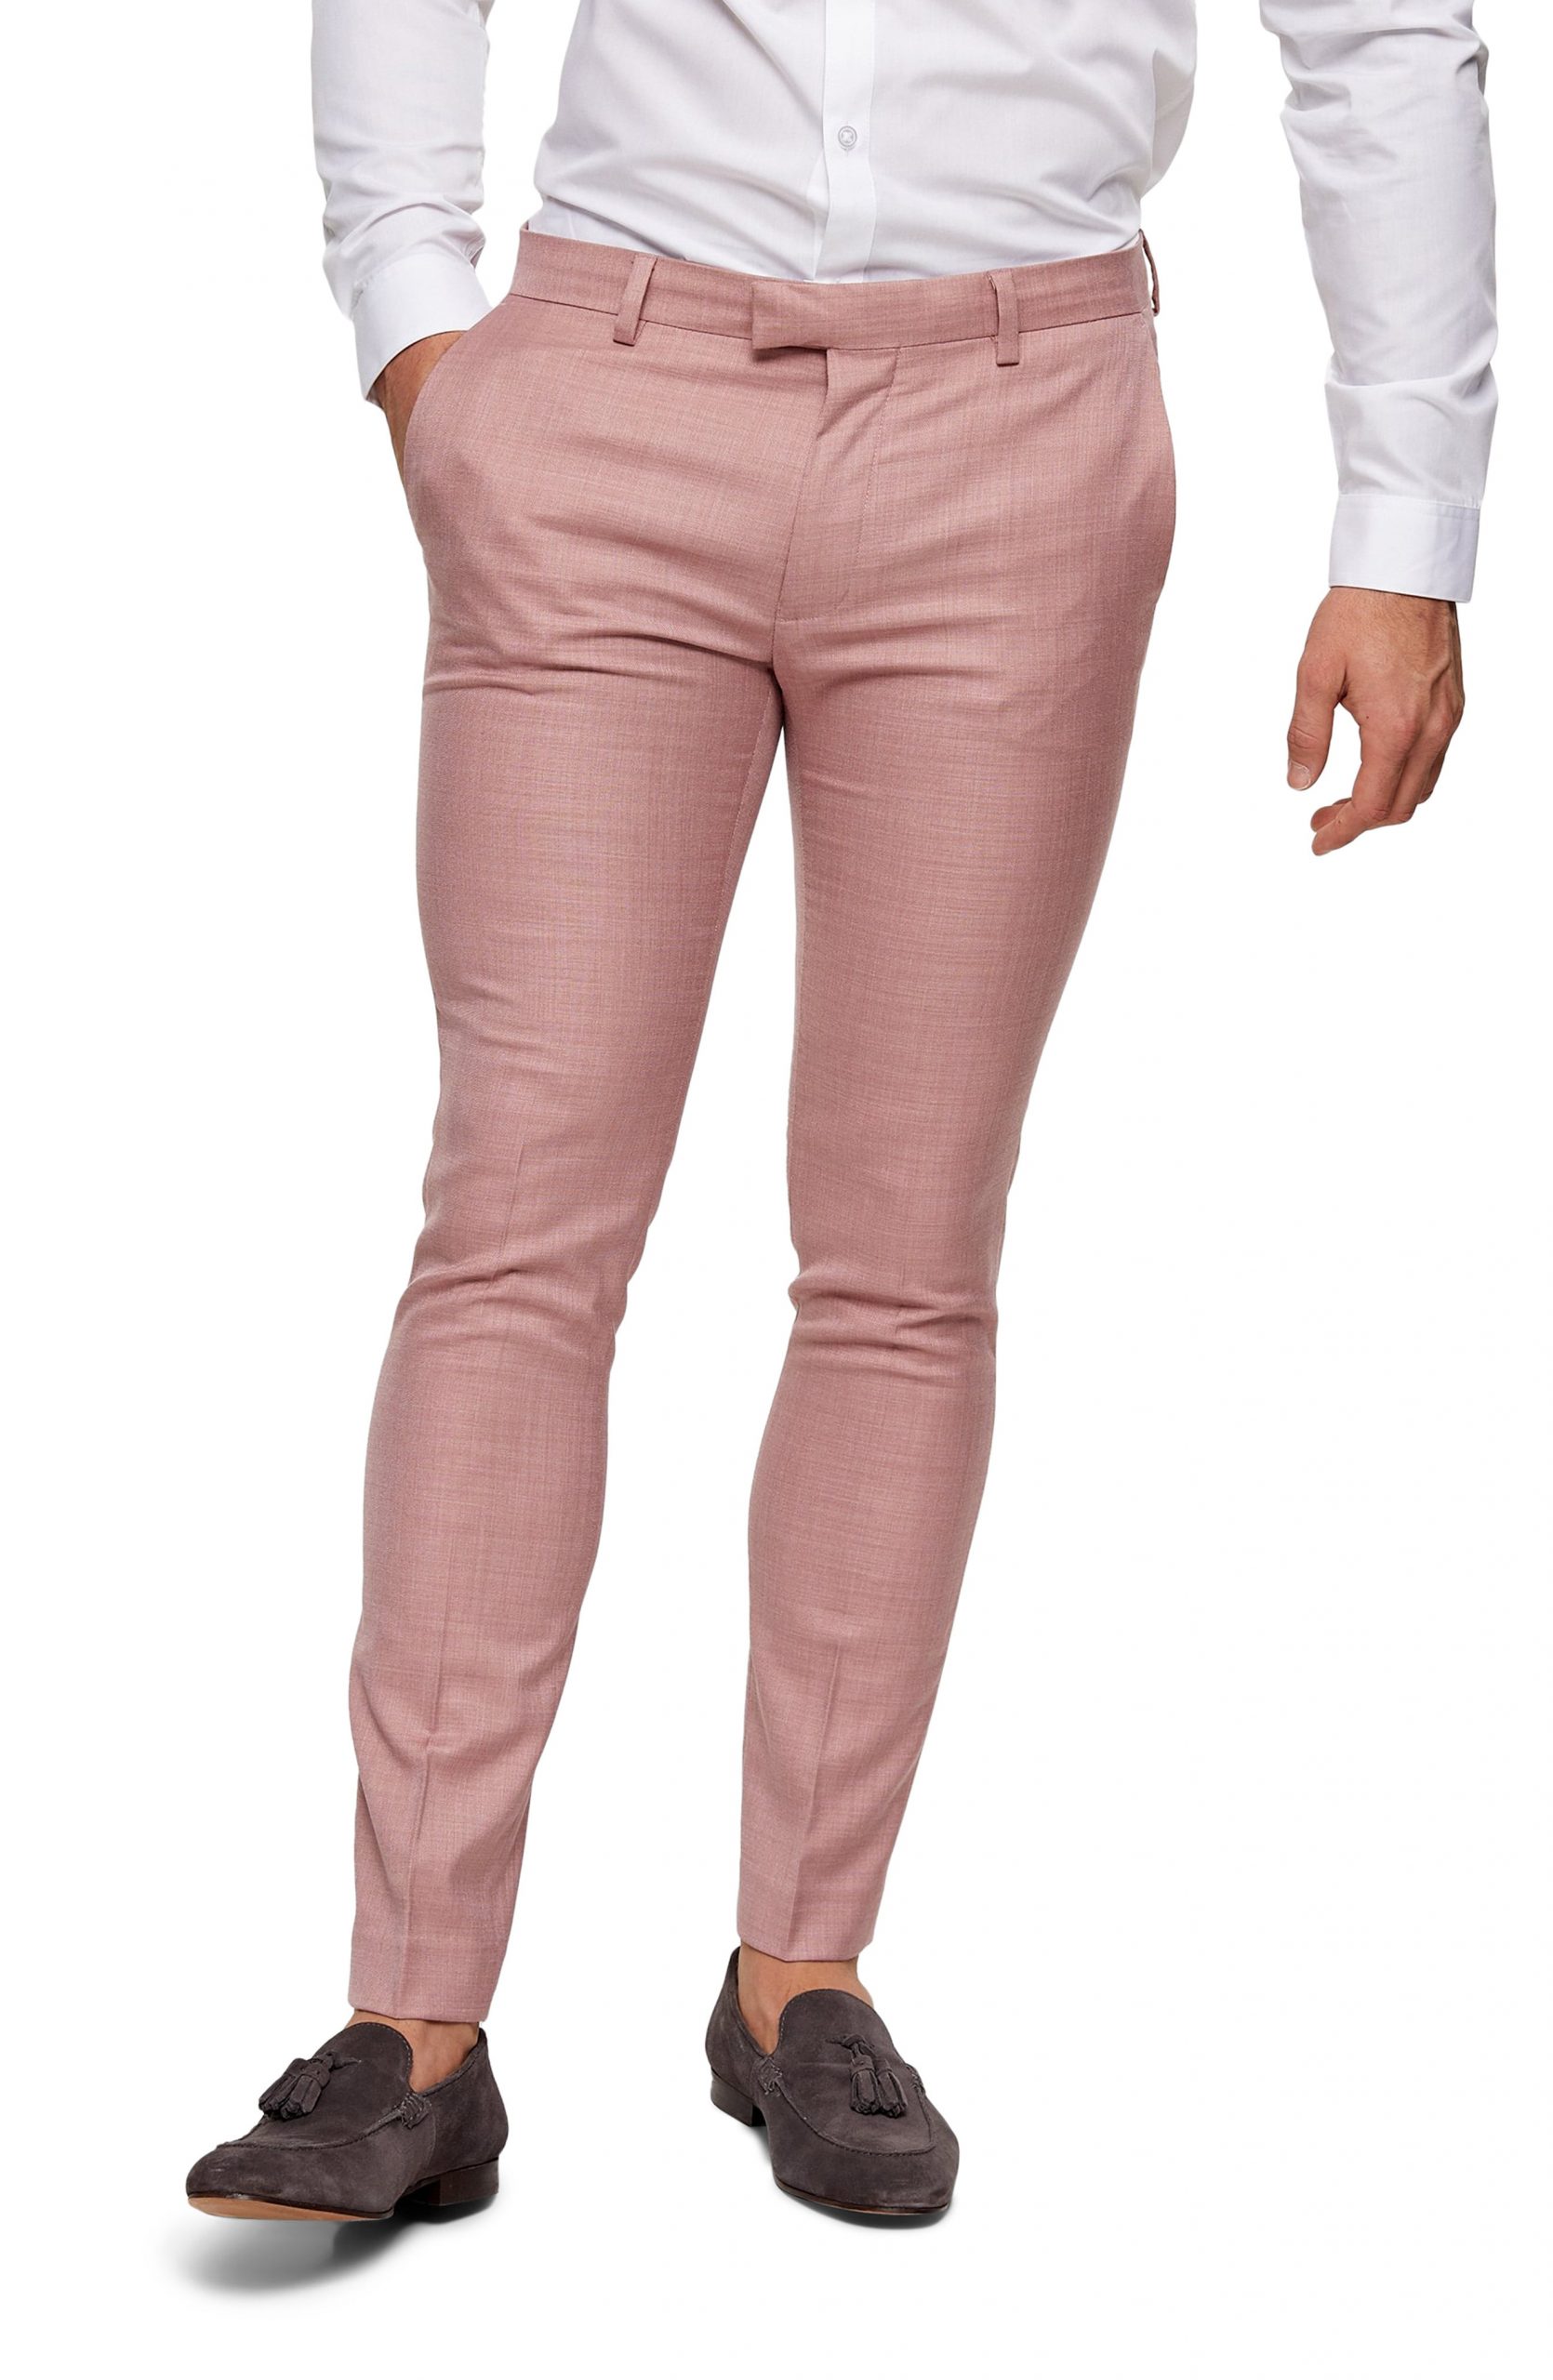 Men’s Topman Dax Super Skinny Trousers, Size 34 x 32 - Pink | The ...